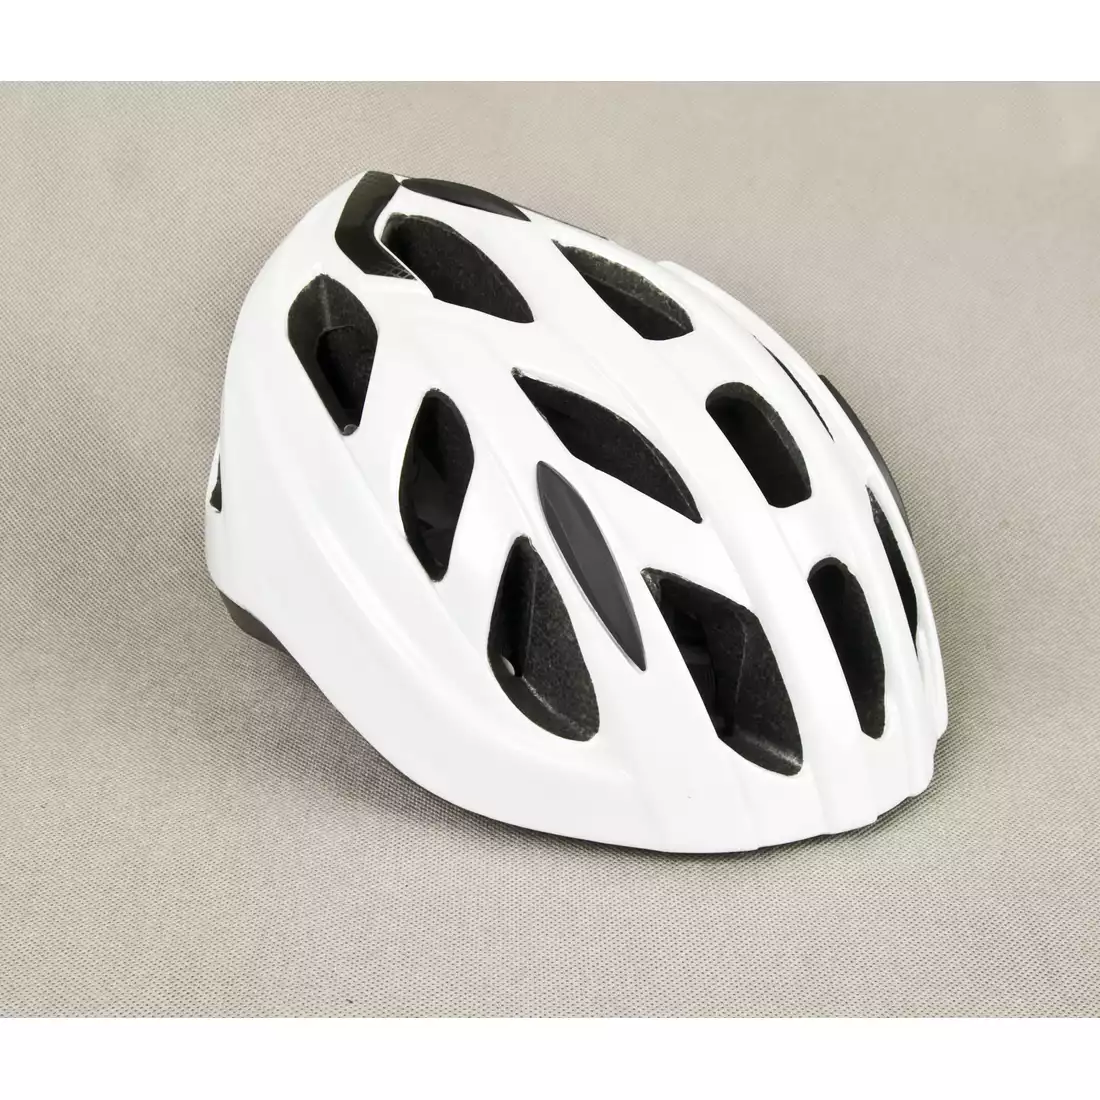 LAZER - MOTION kask rowerowy MTB, kolor: white